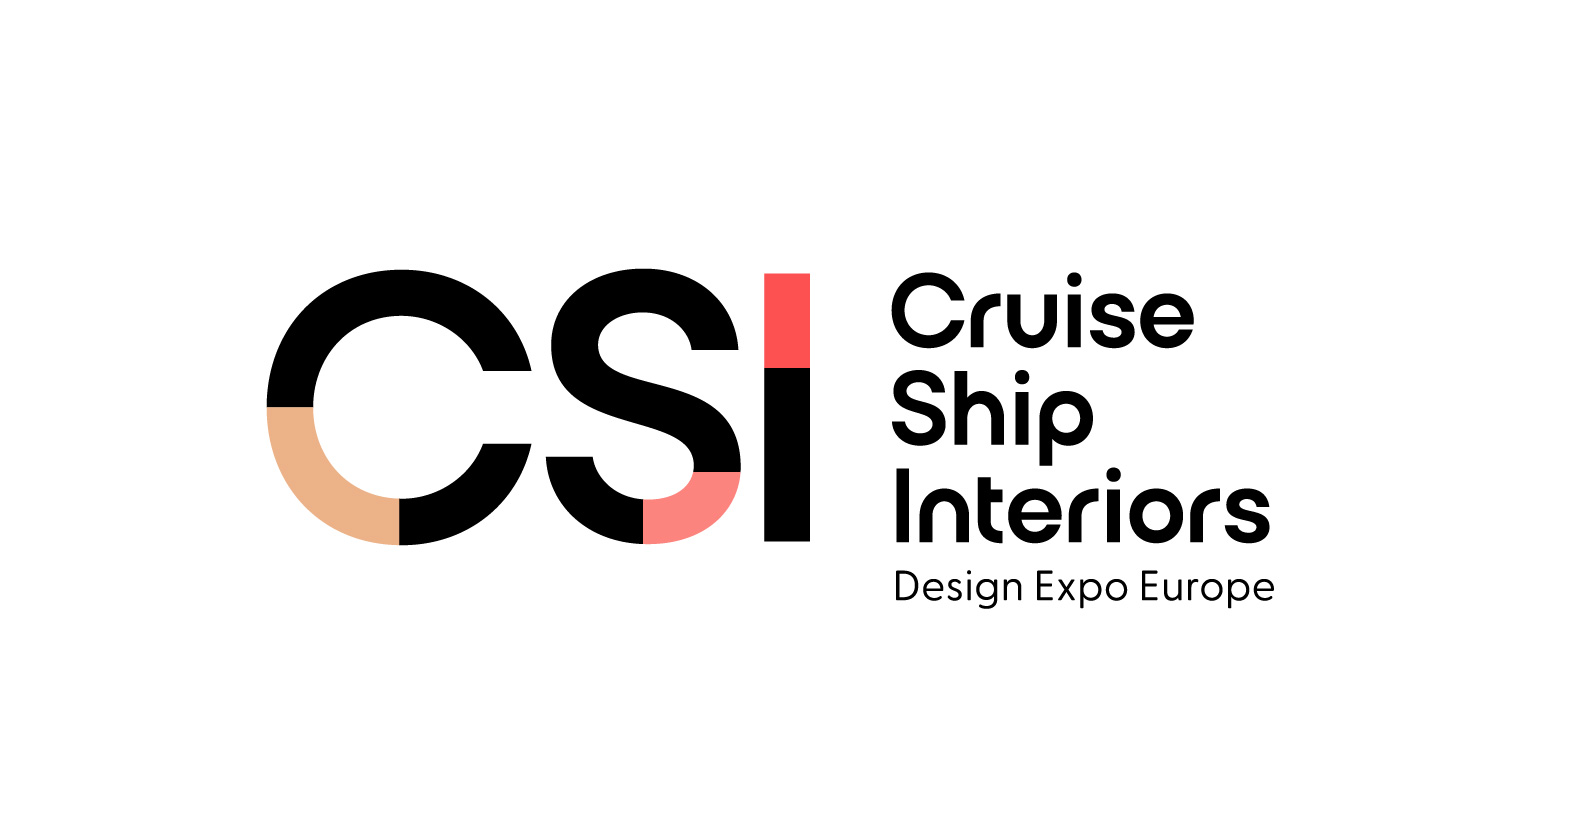 CSI Design Expo Europe